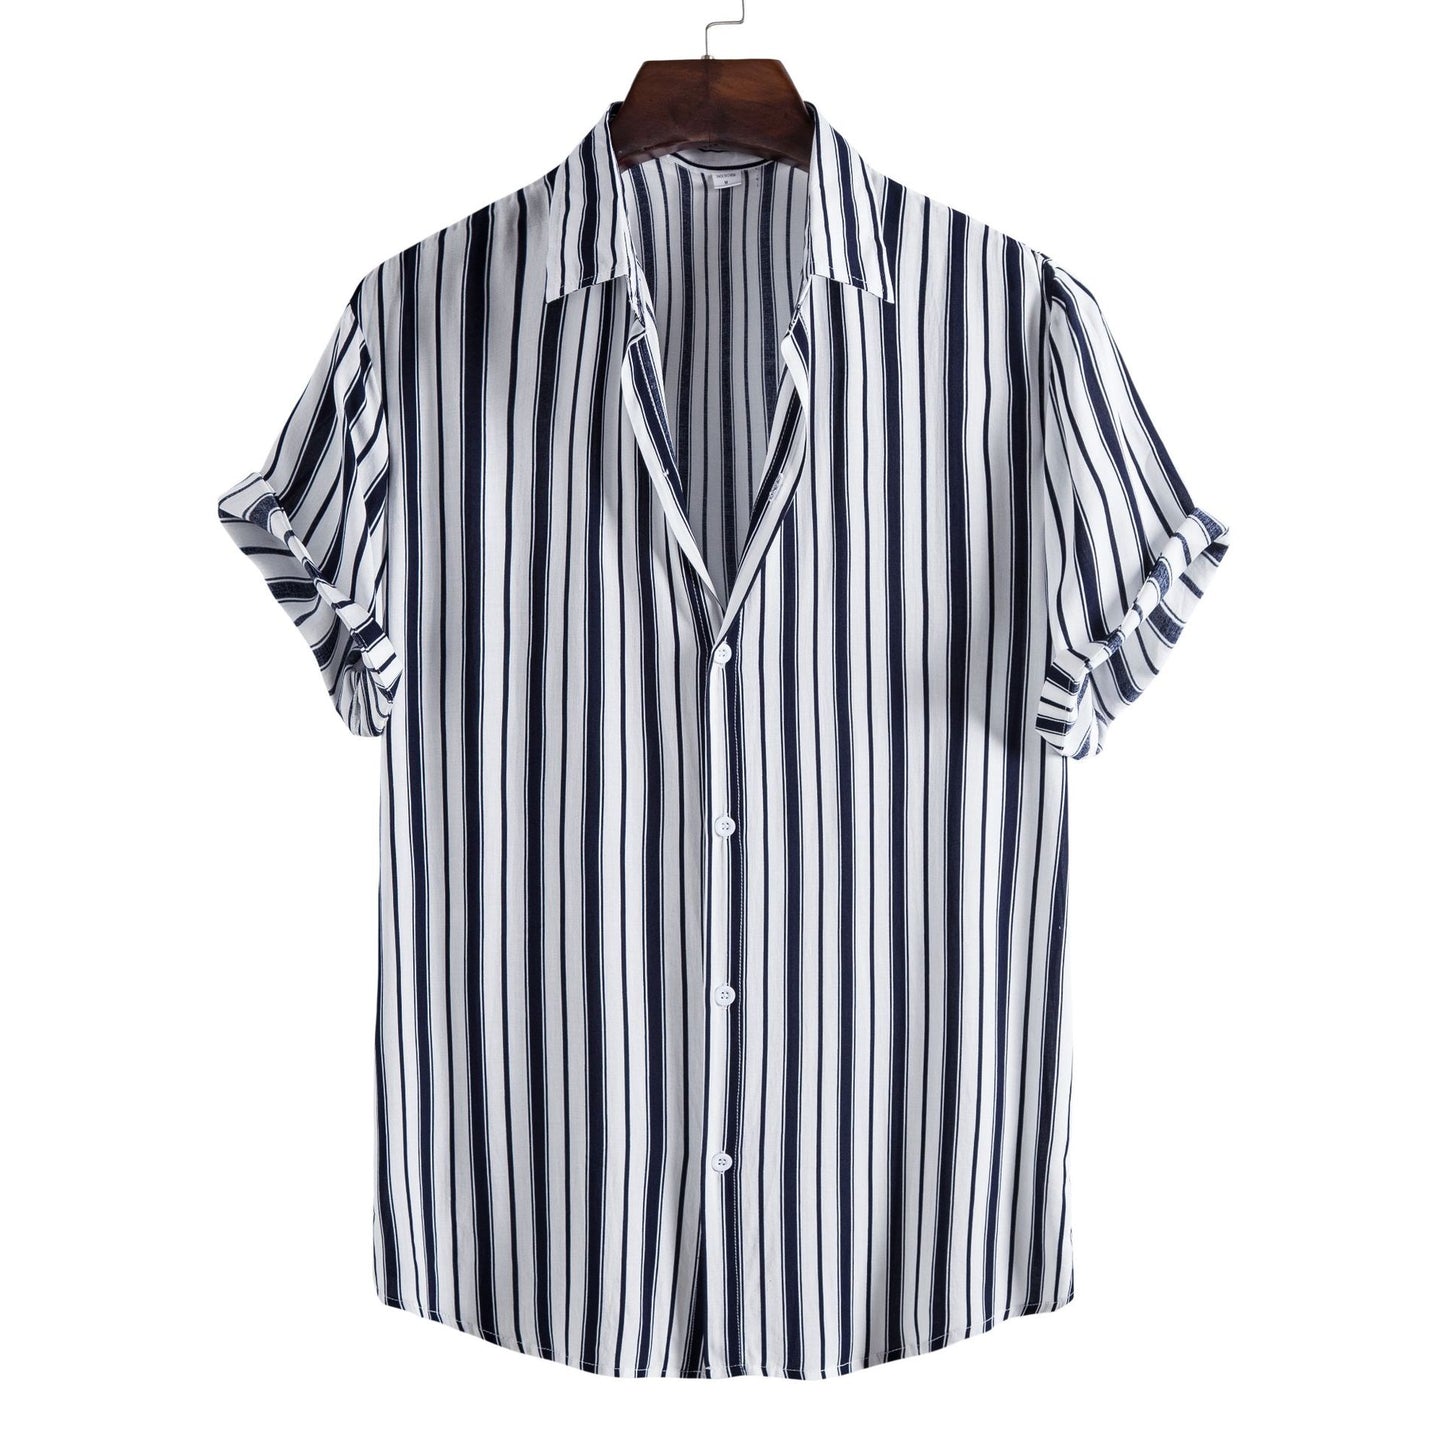 Printed Casual Men's Short-sleeved Shirt Lapel apparel & accessories